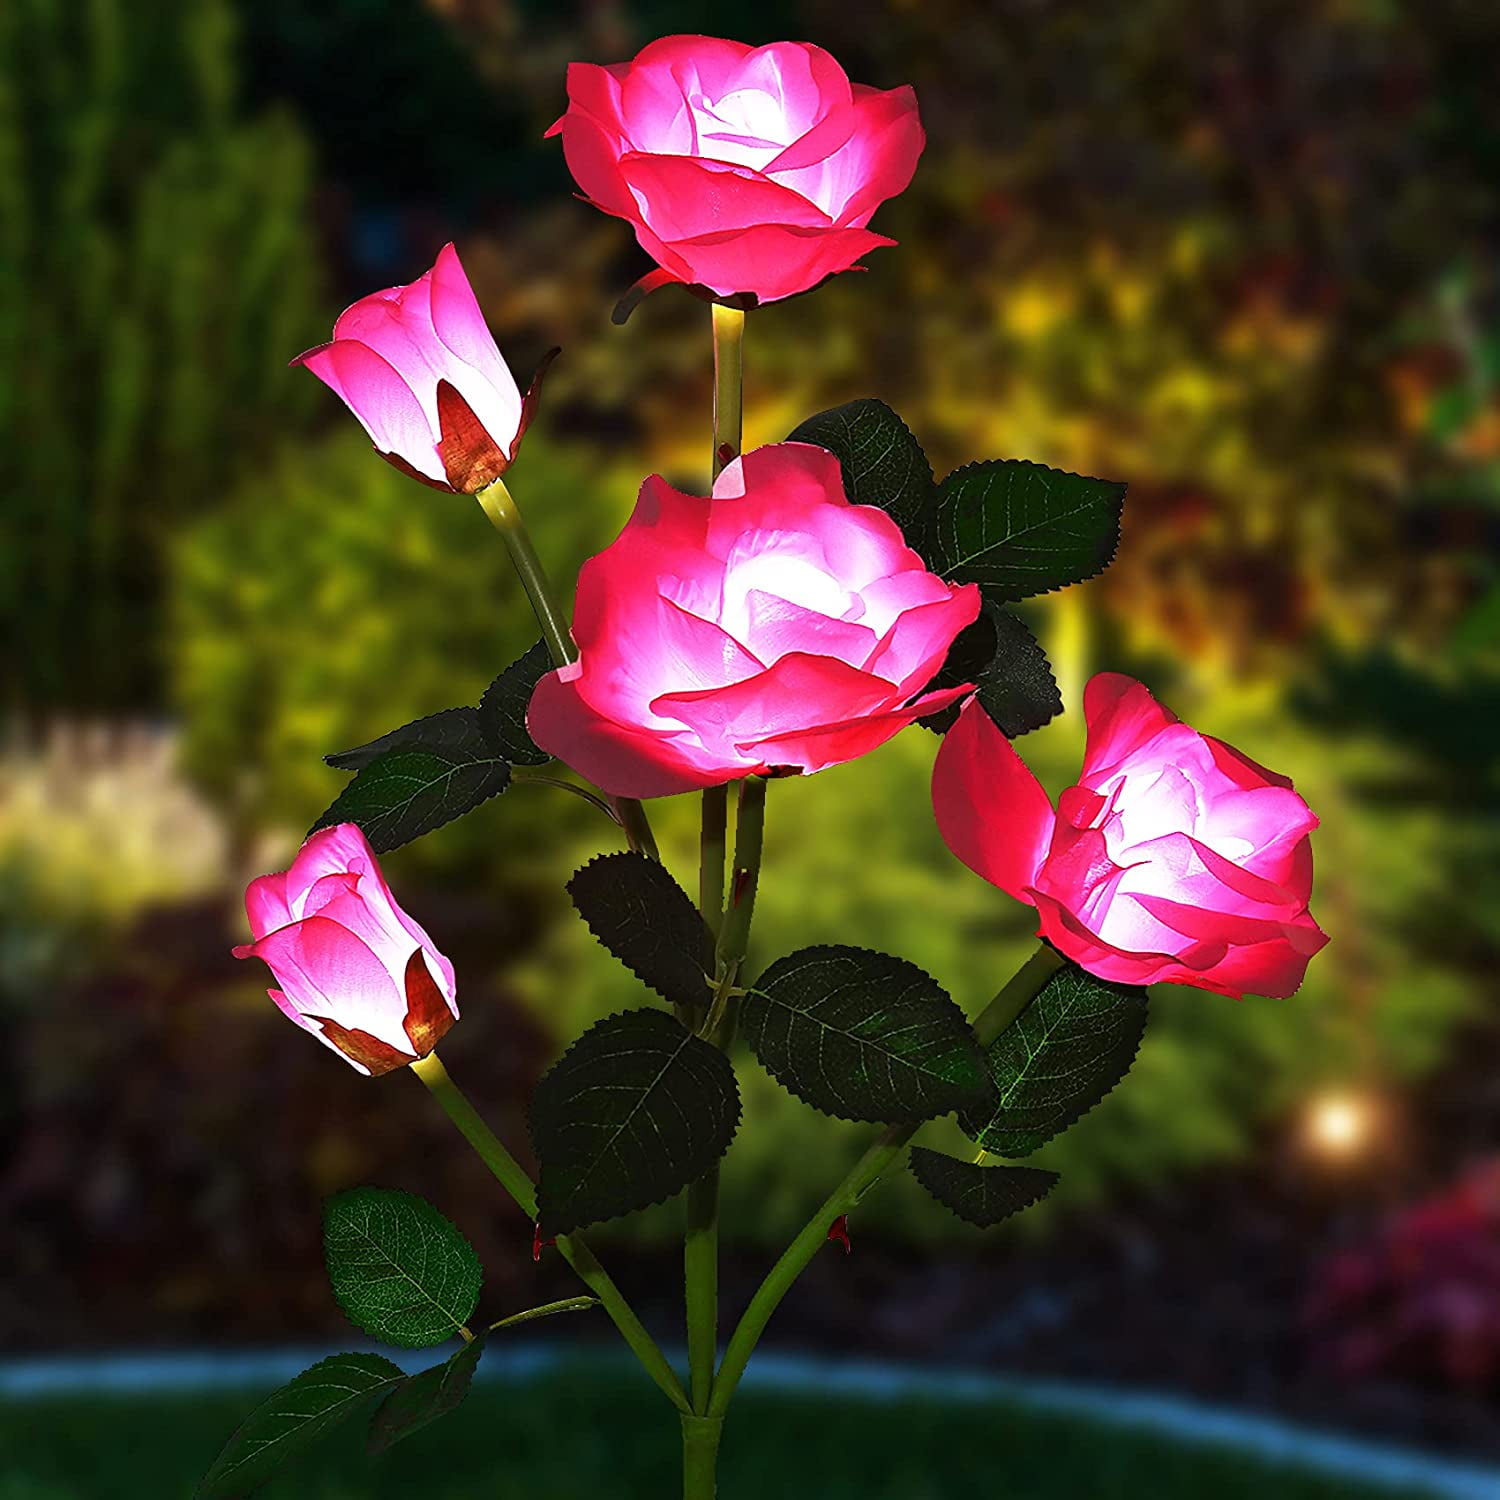 Rose Flower LED Lights Solar Powered Garden Stake Fairy Lamp Yard Outdoor Decor 